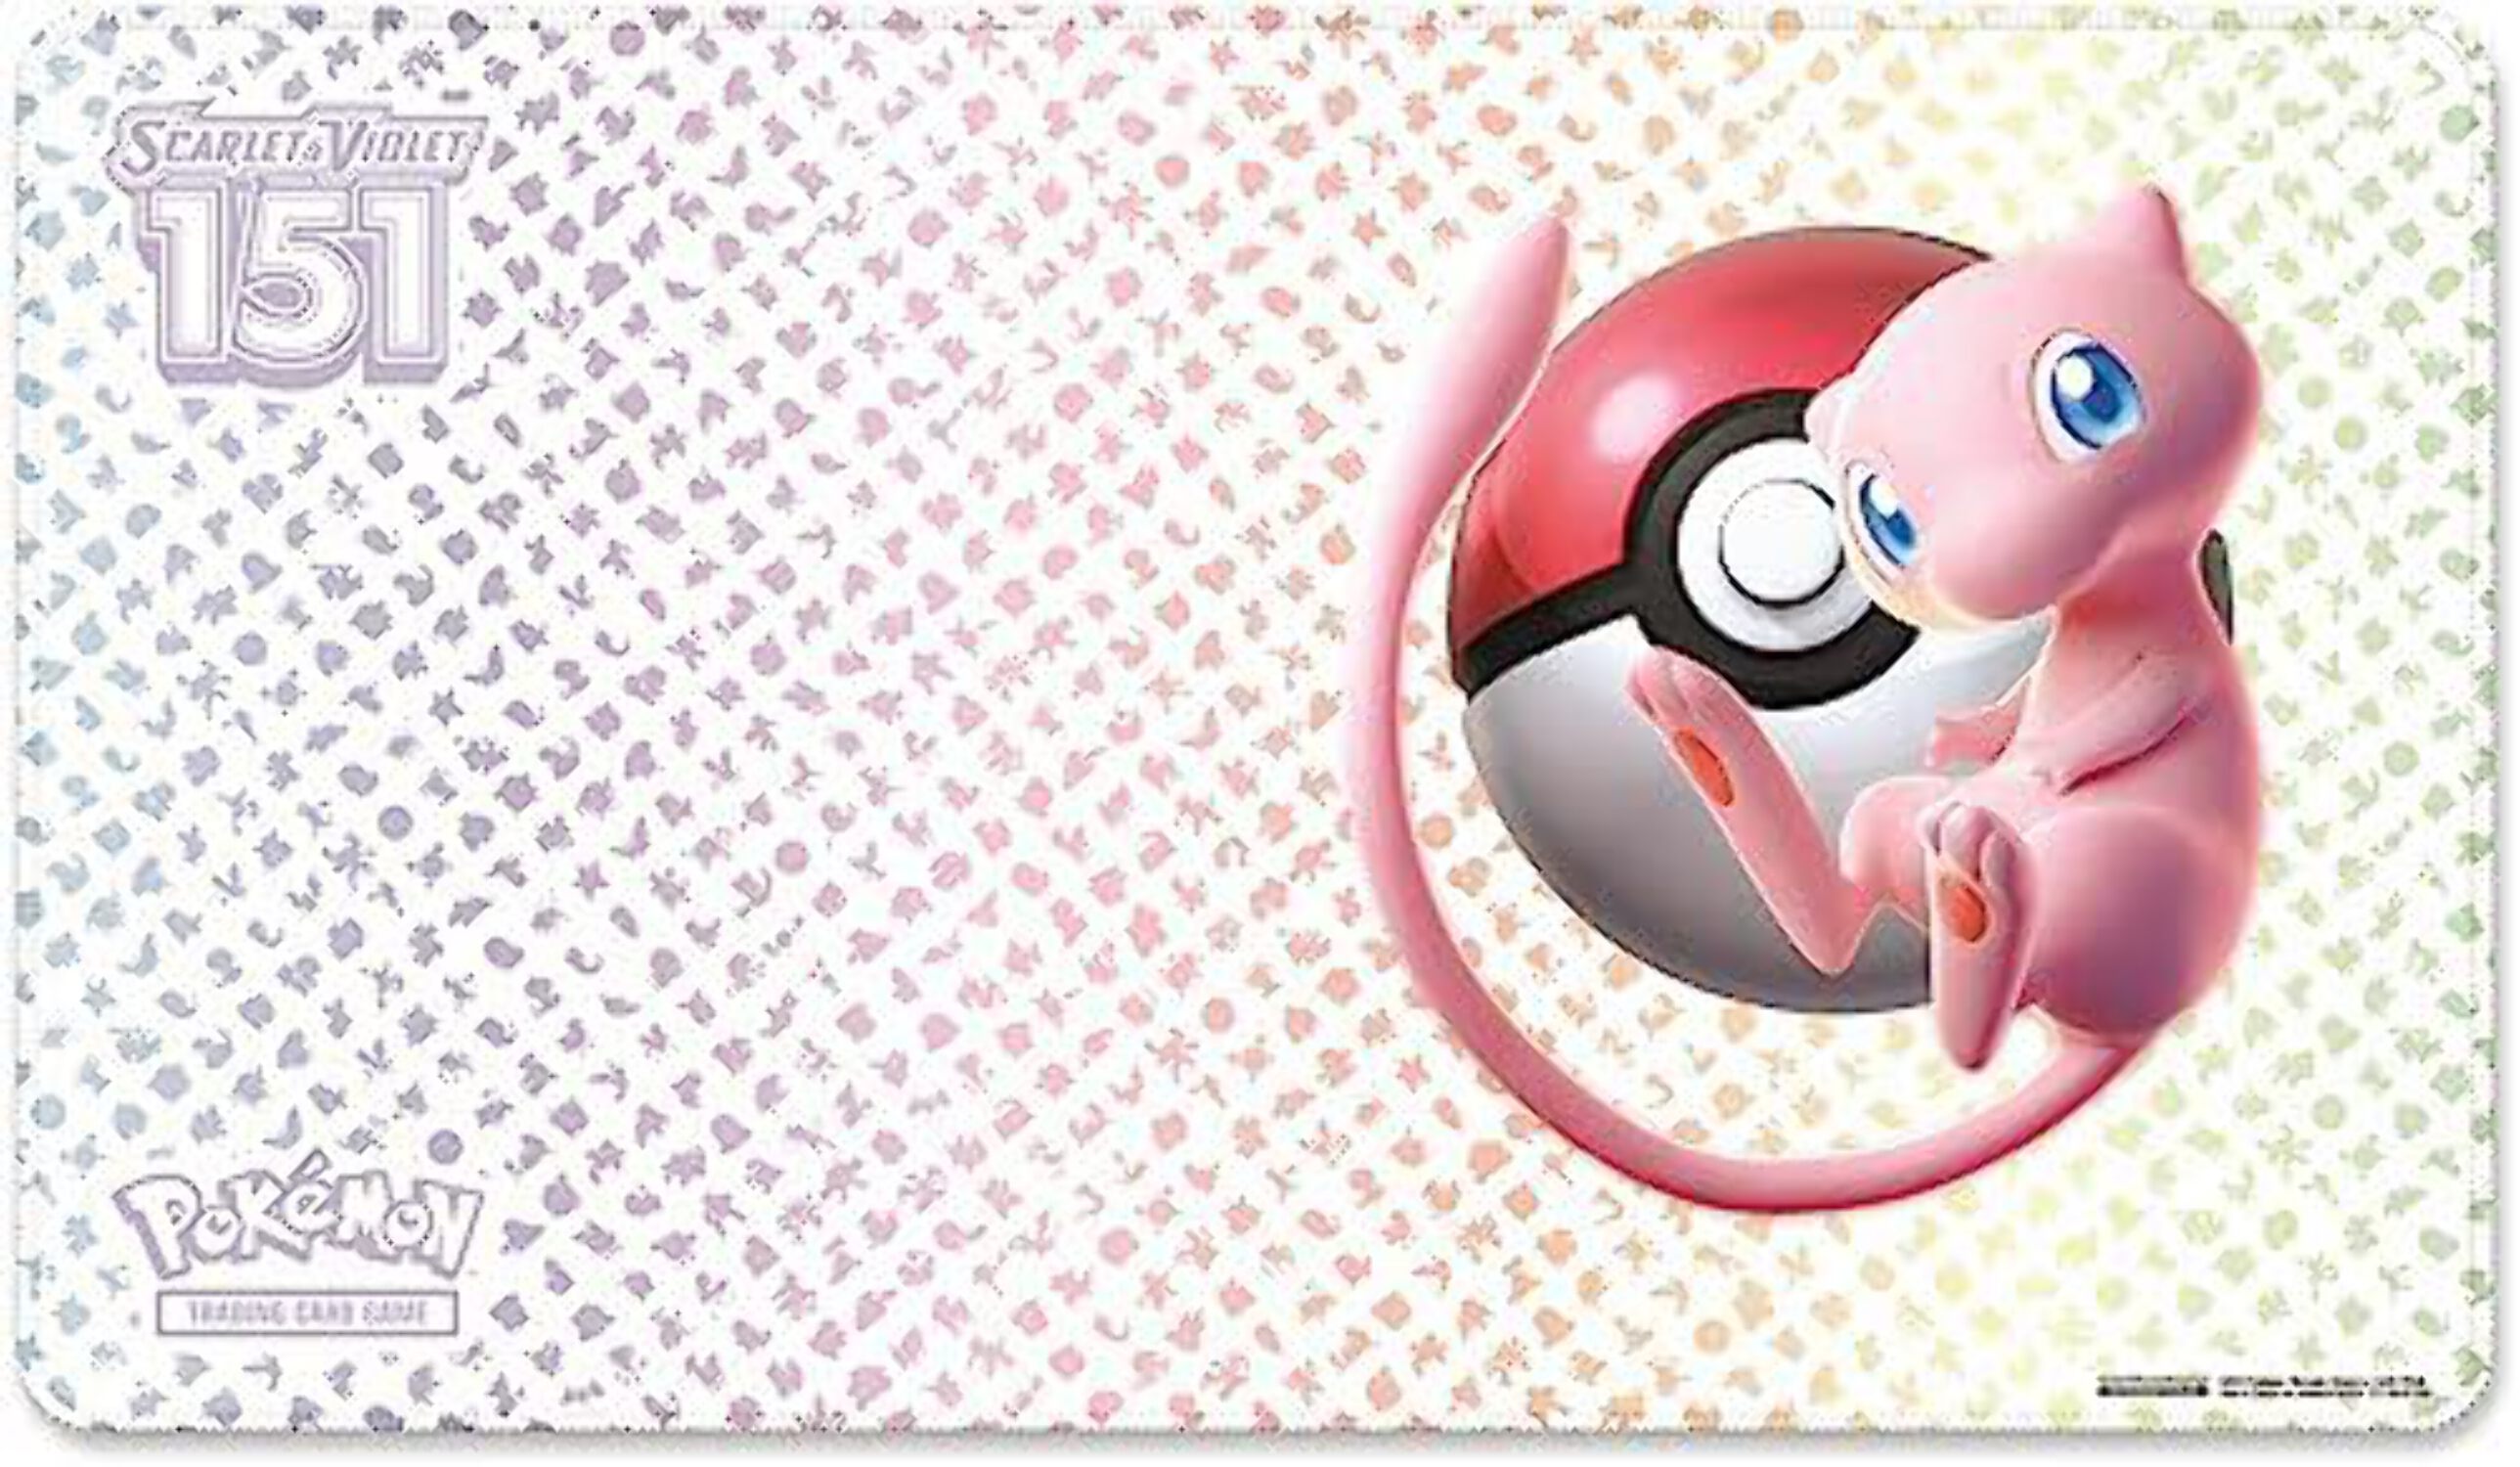 Pokemon Trading Card Games Scarlet & Violet—151 Ultra-Premium Collection - 16 Booster Packs from Pokémon Tcg: Scarlet & Violet—151 - image 3 of 5